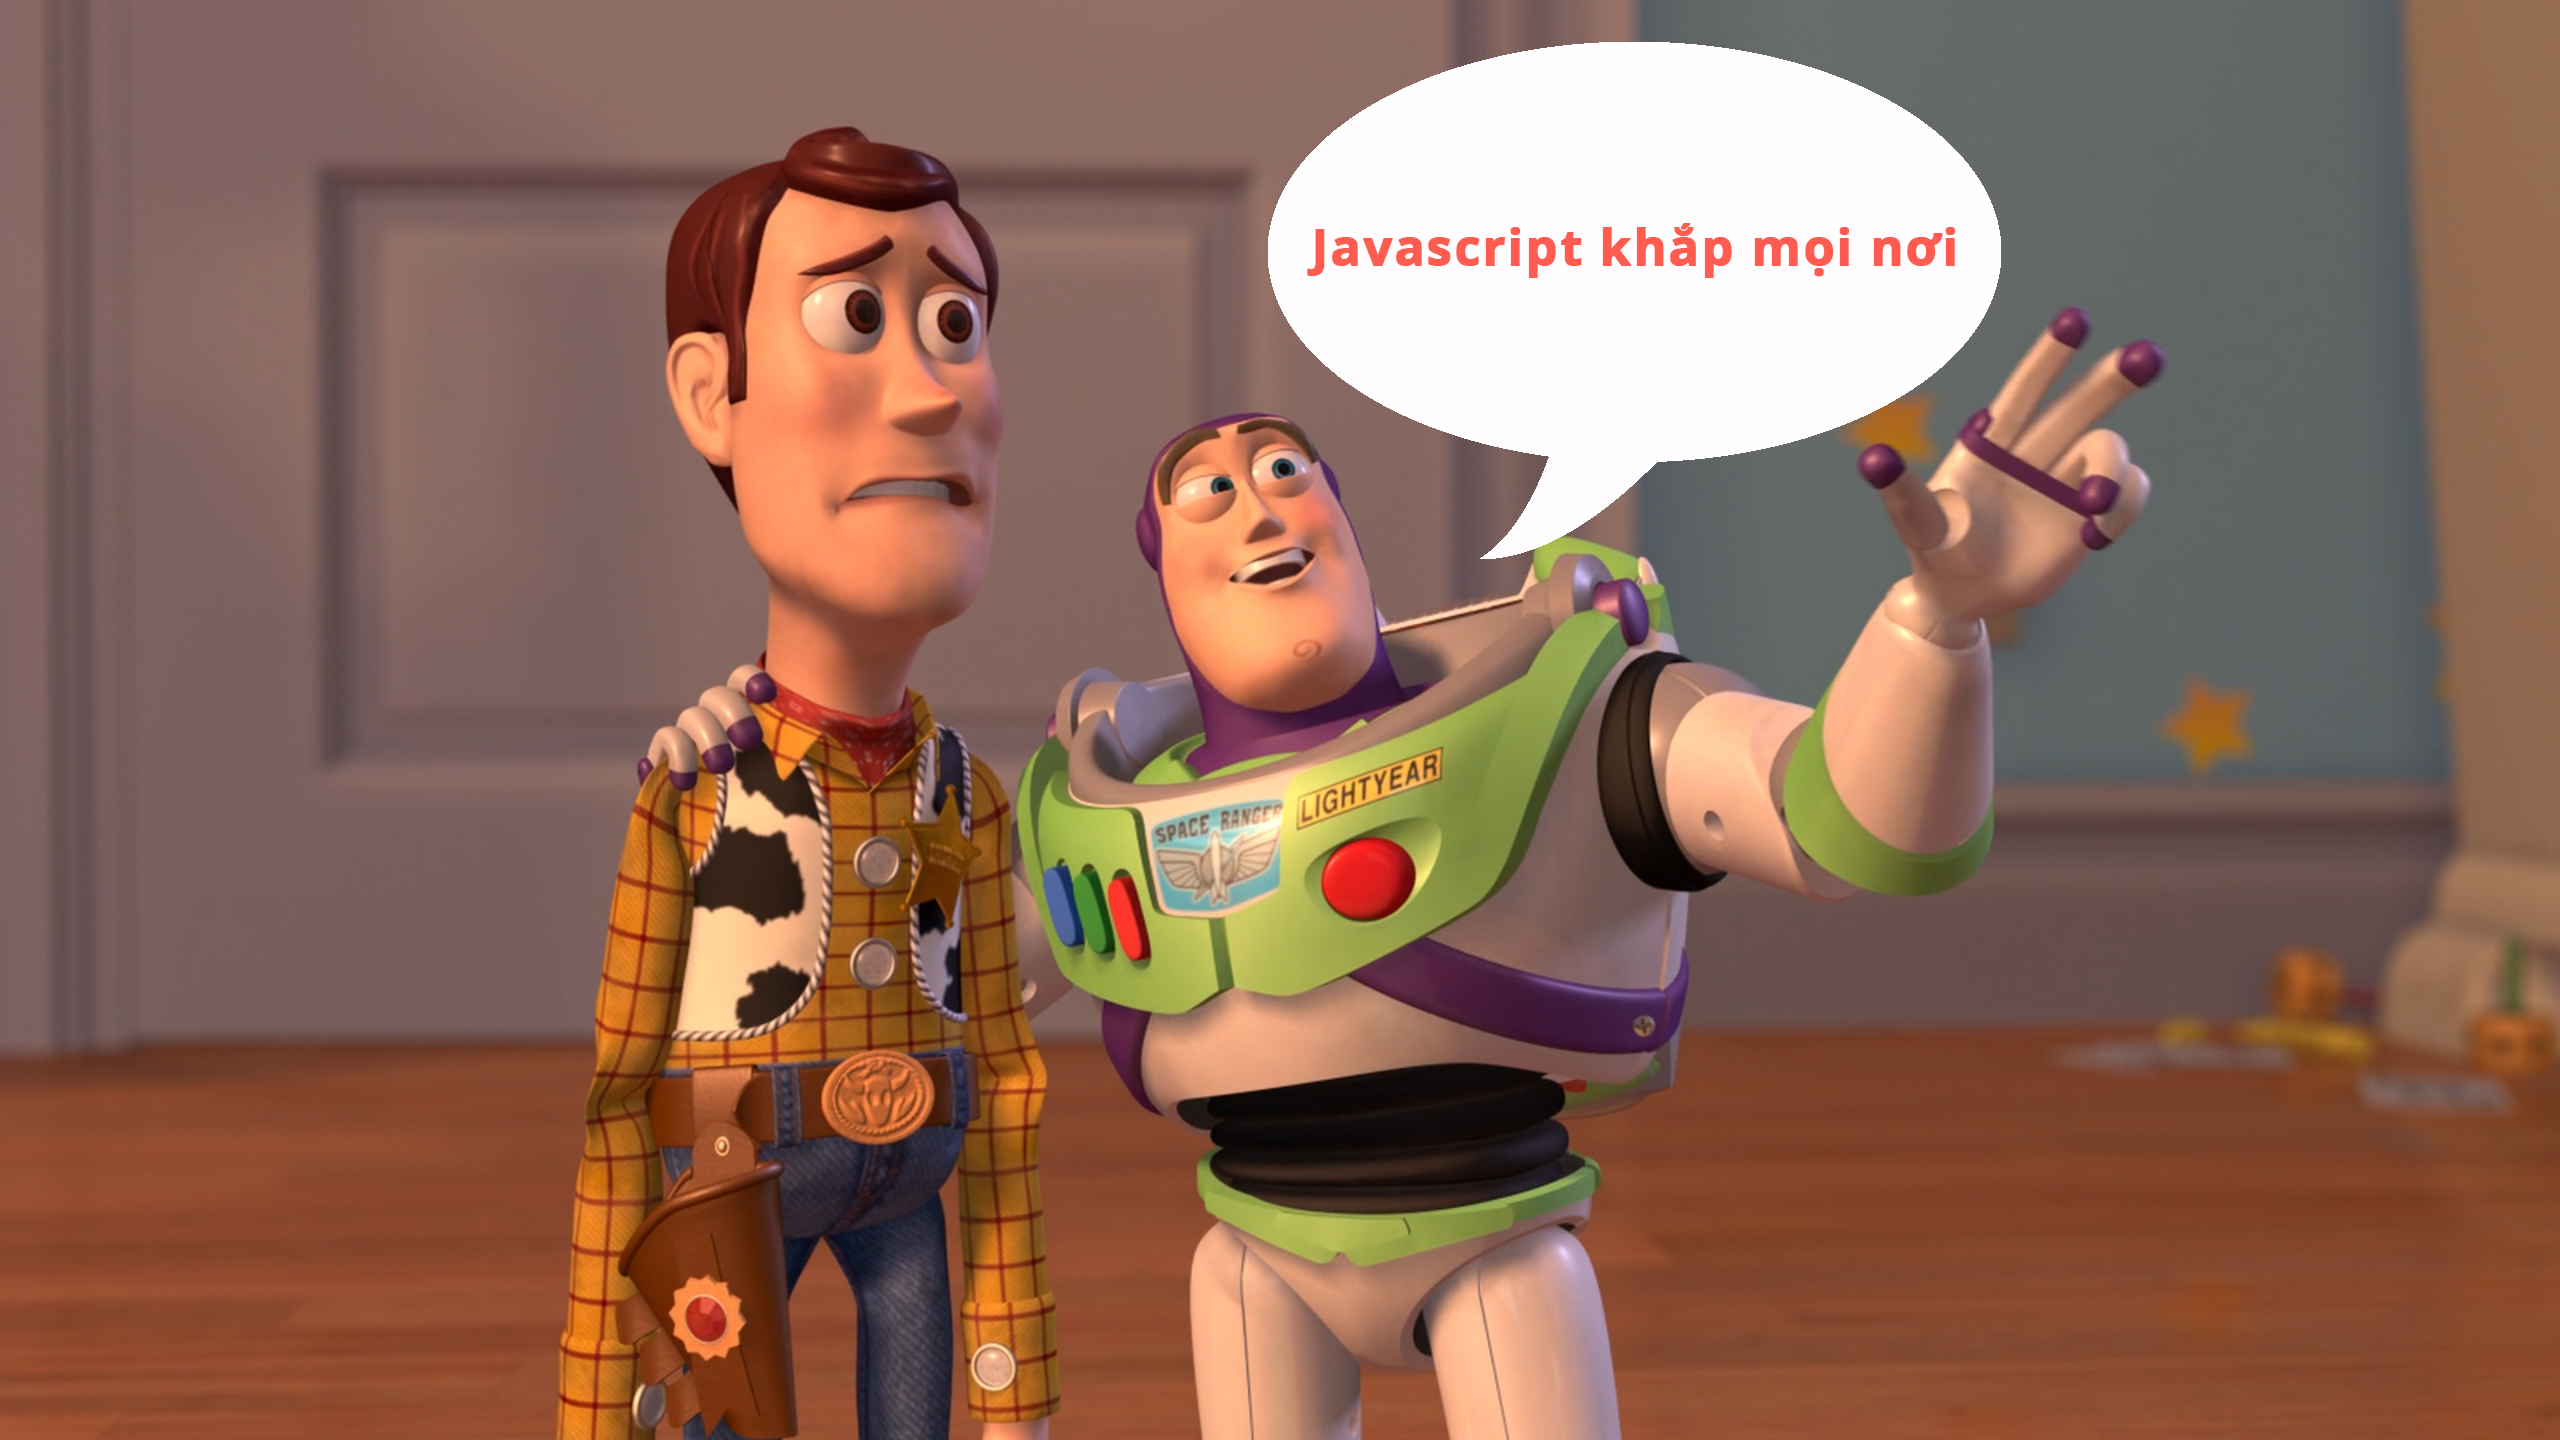 Javascript khắp mọi nơi